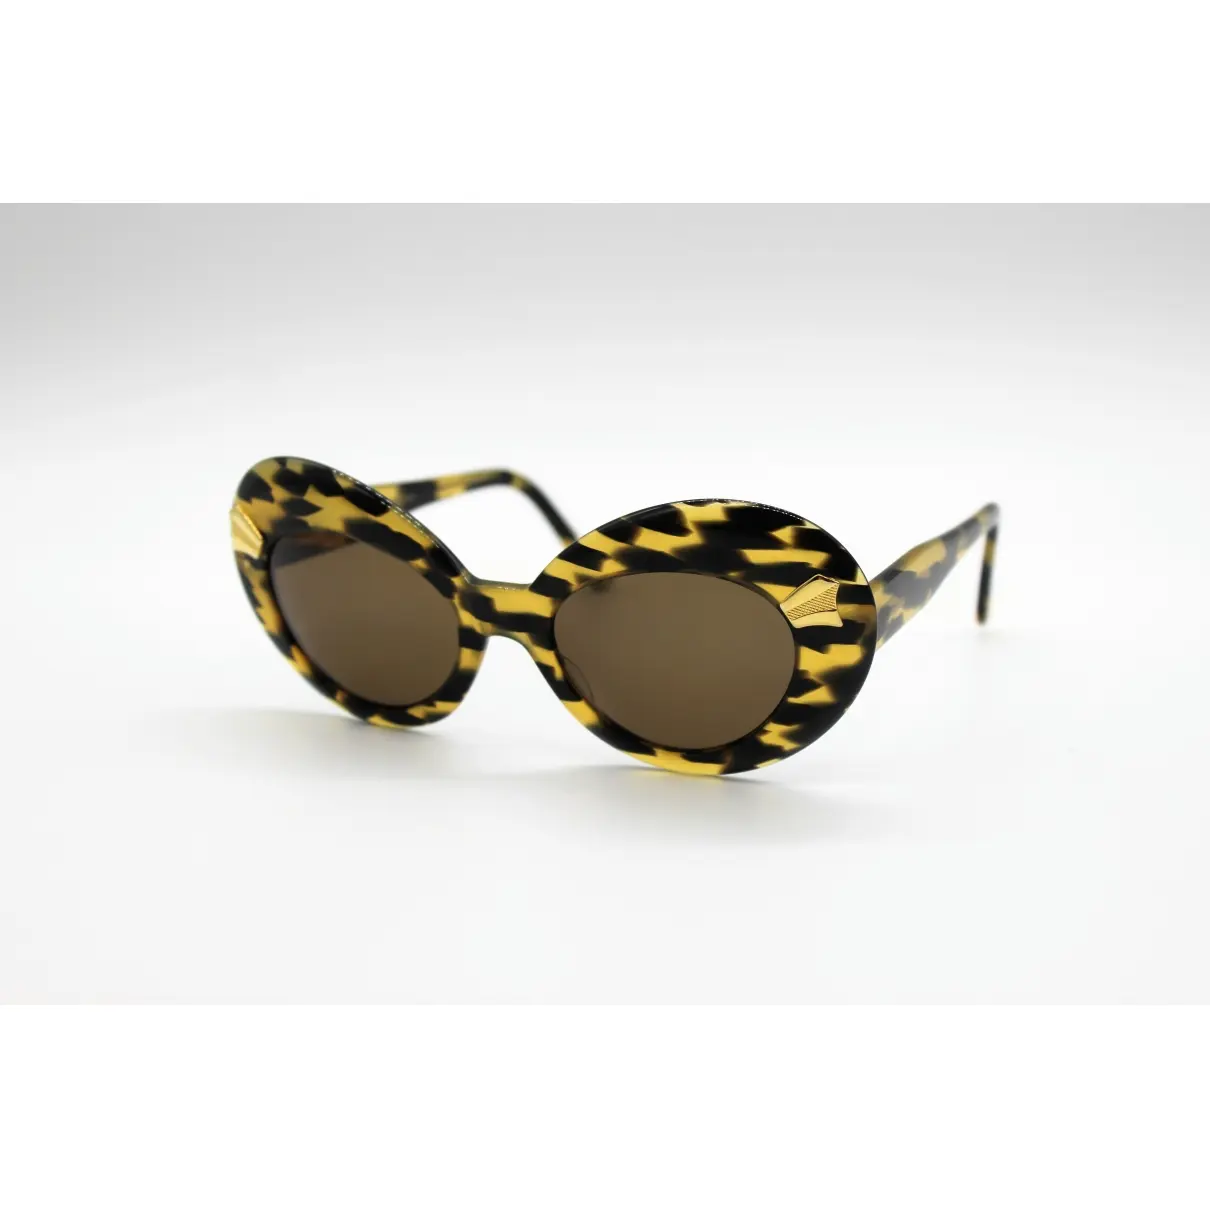 Oversized sunglasses Robert La Roche - Vintage